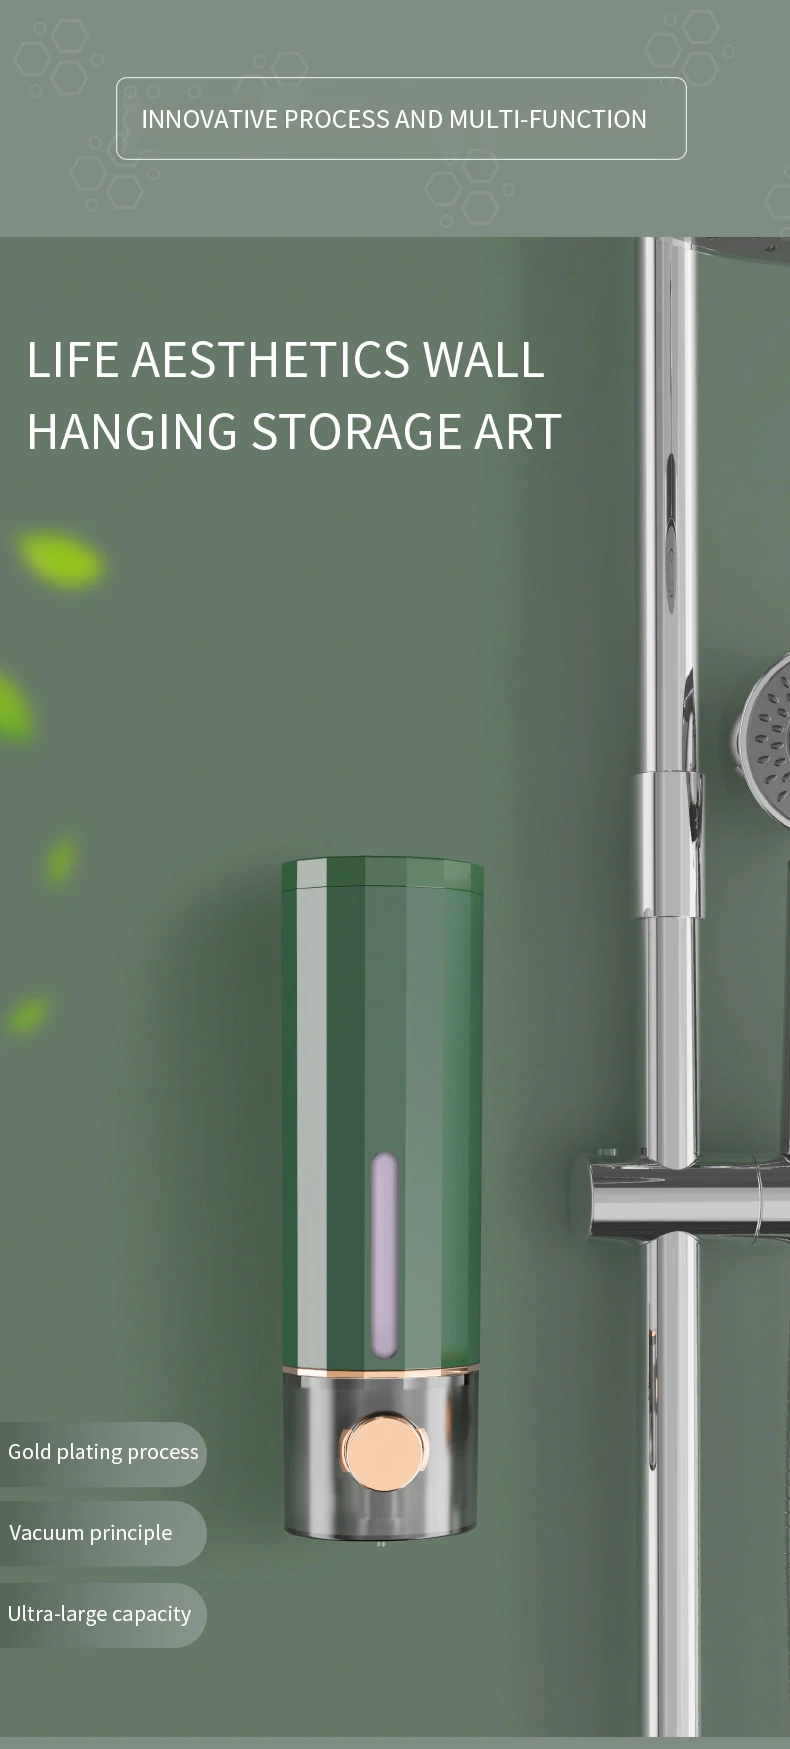 450ml liquid soap dispenser wall mounted manual shower shampoo dispenser